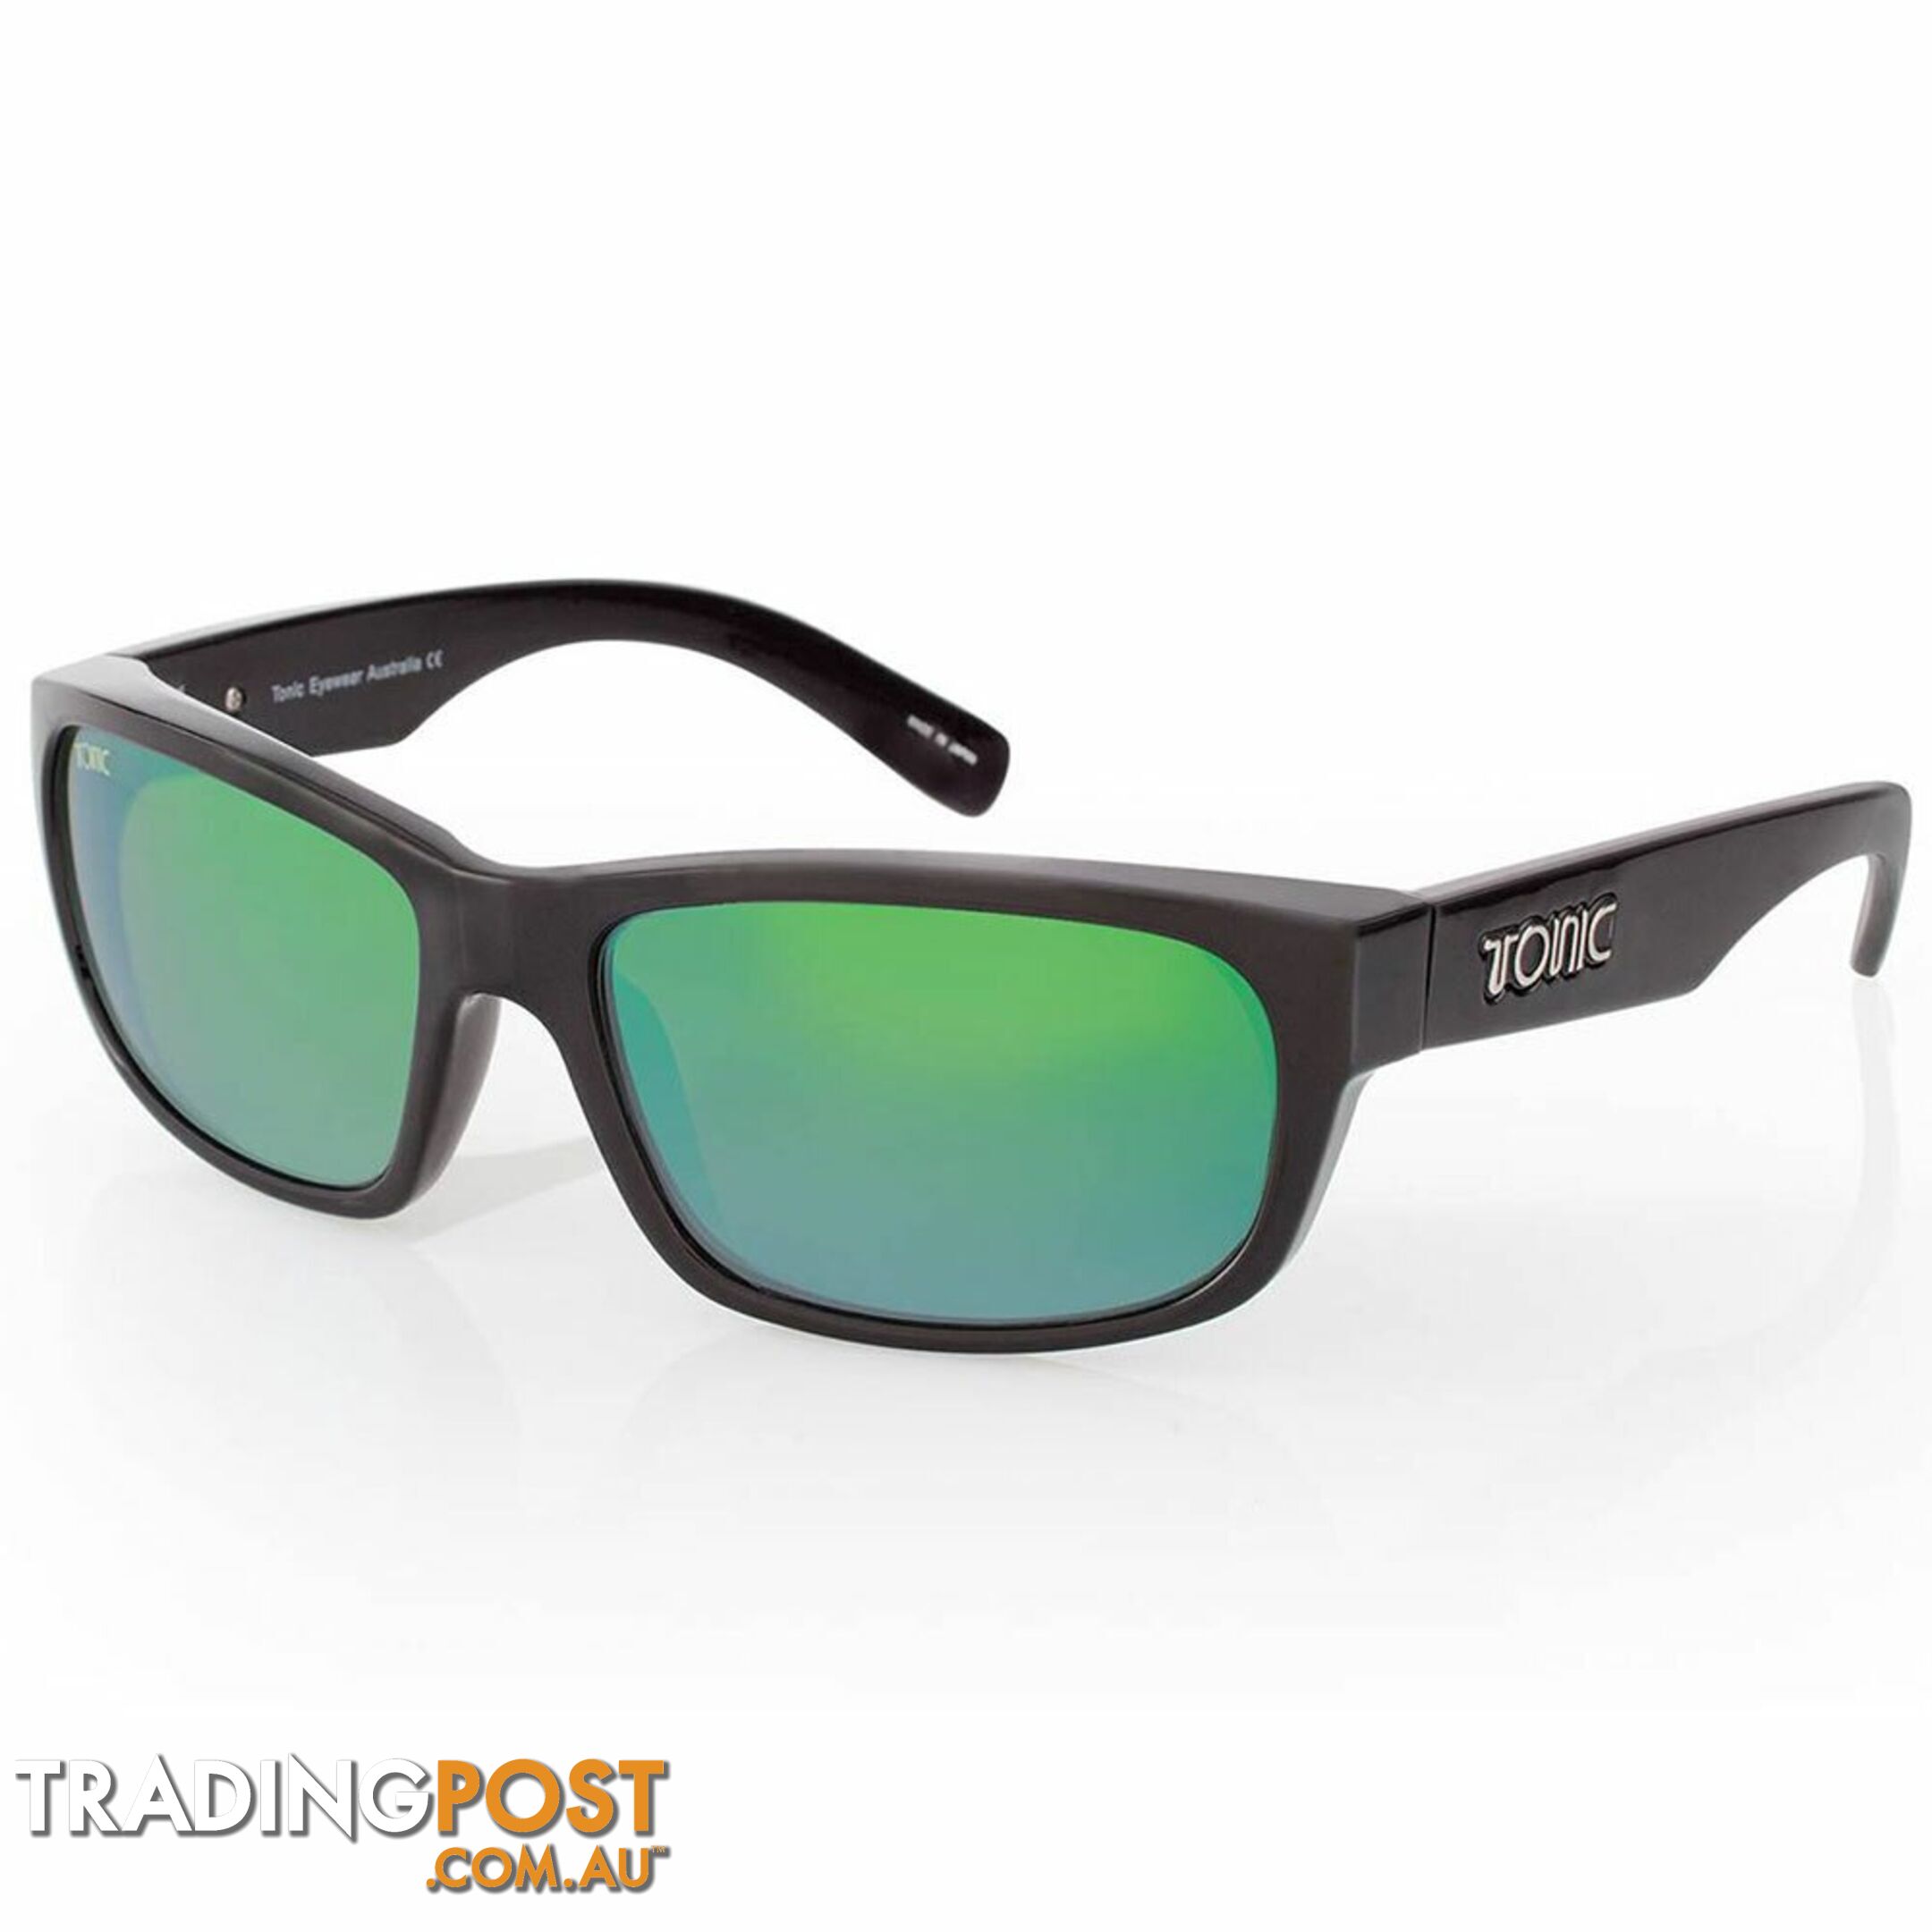 Tonic Torquay Sunglasses - TONTORQ - Tonic Eyewear Sunglasses